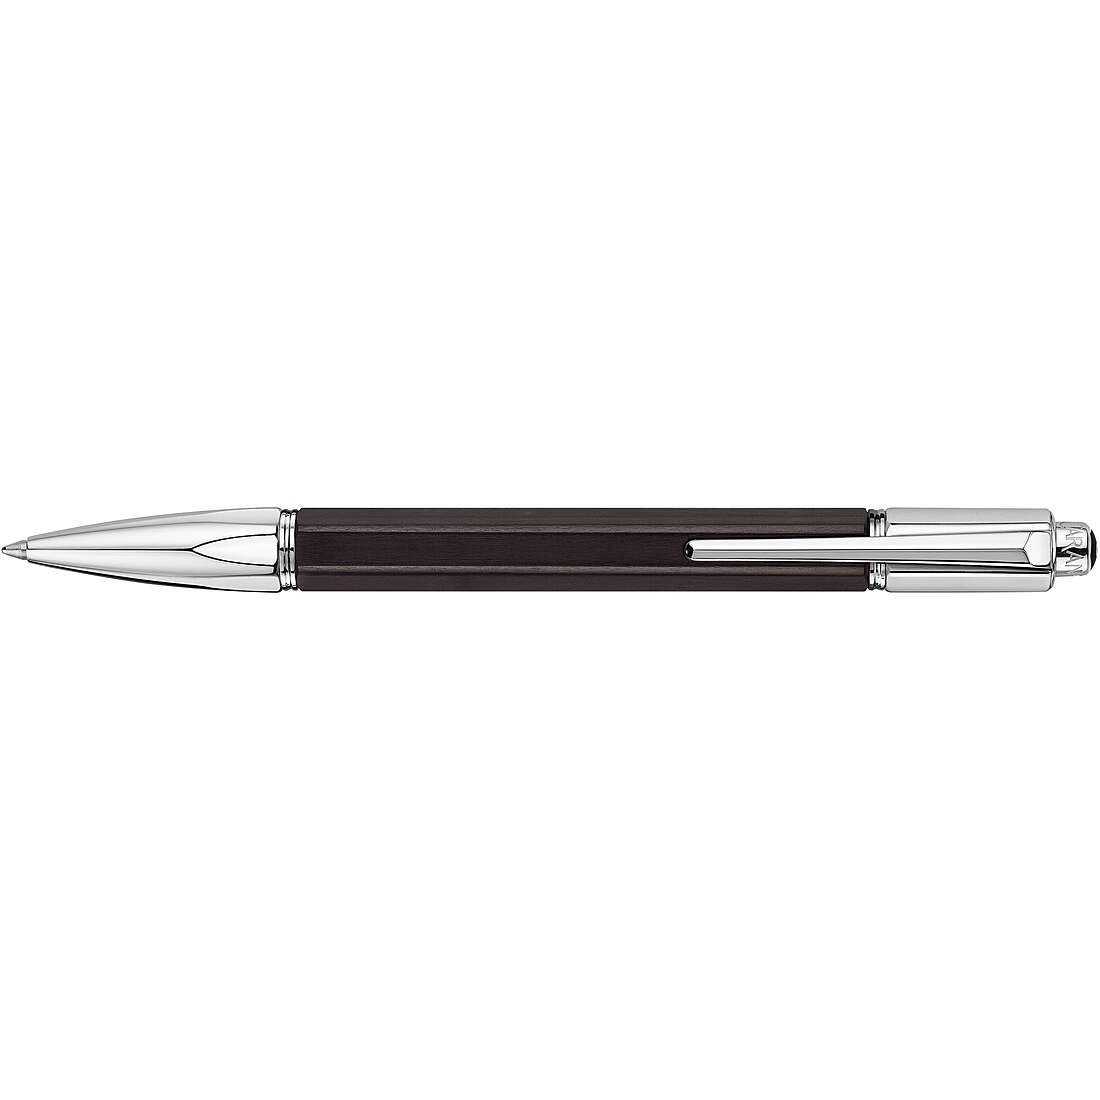 Stift mit Gravur Caran D'Ache Varius ebony black für mann A4480086